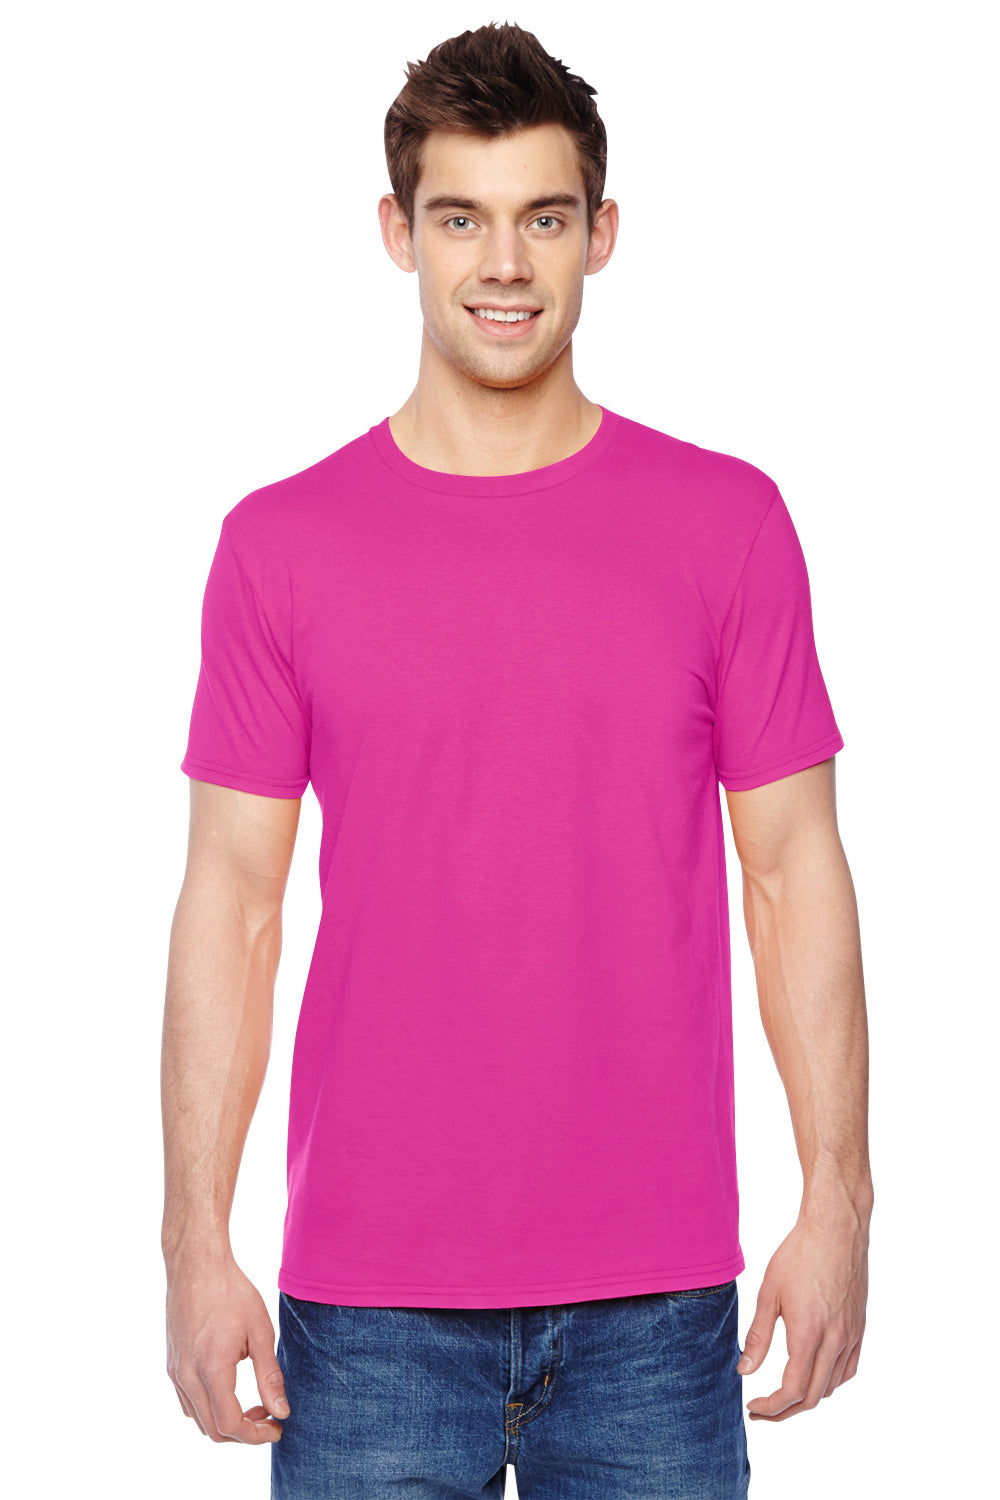 Fruit Of The Loom SF45R Mens Sofspun Jersey Short Sleeve Crewneck T-Shirt Cyber Pink Front